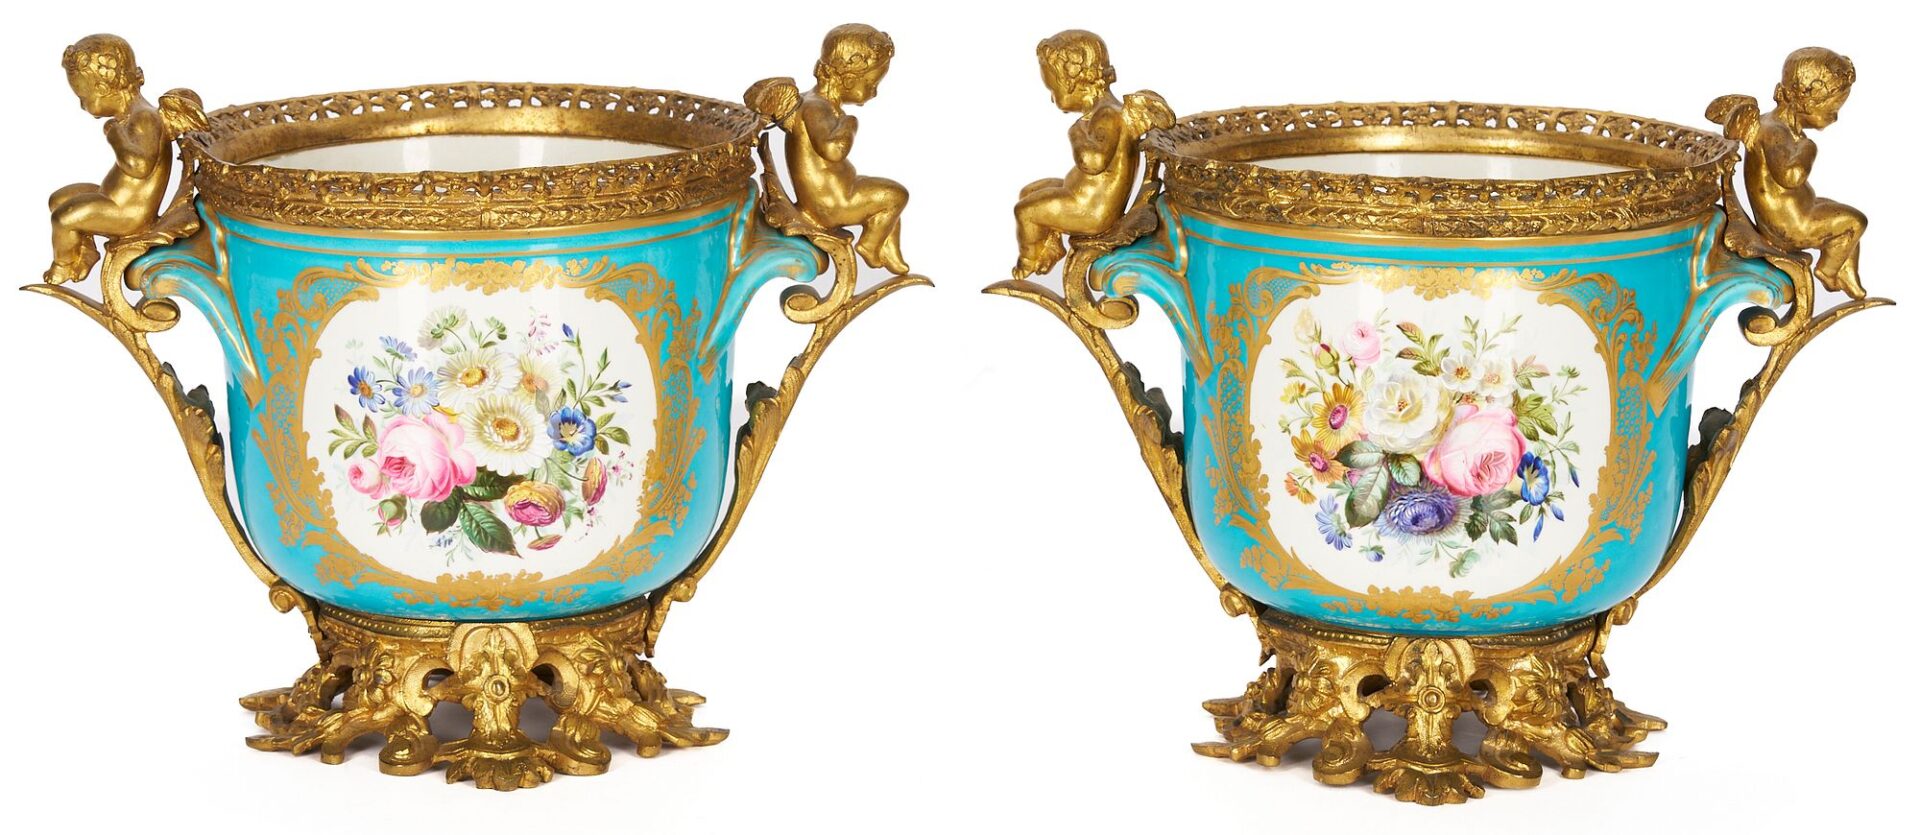 Lot 286: Pair of Sevres Style Porcelain & Ormolu Cachepots